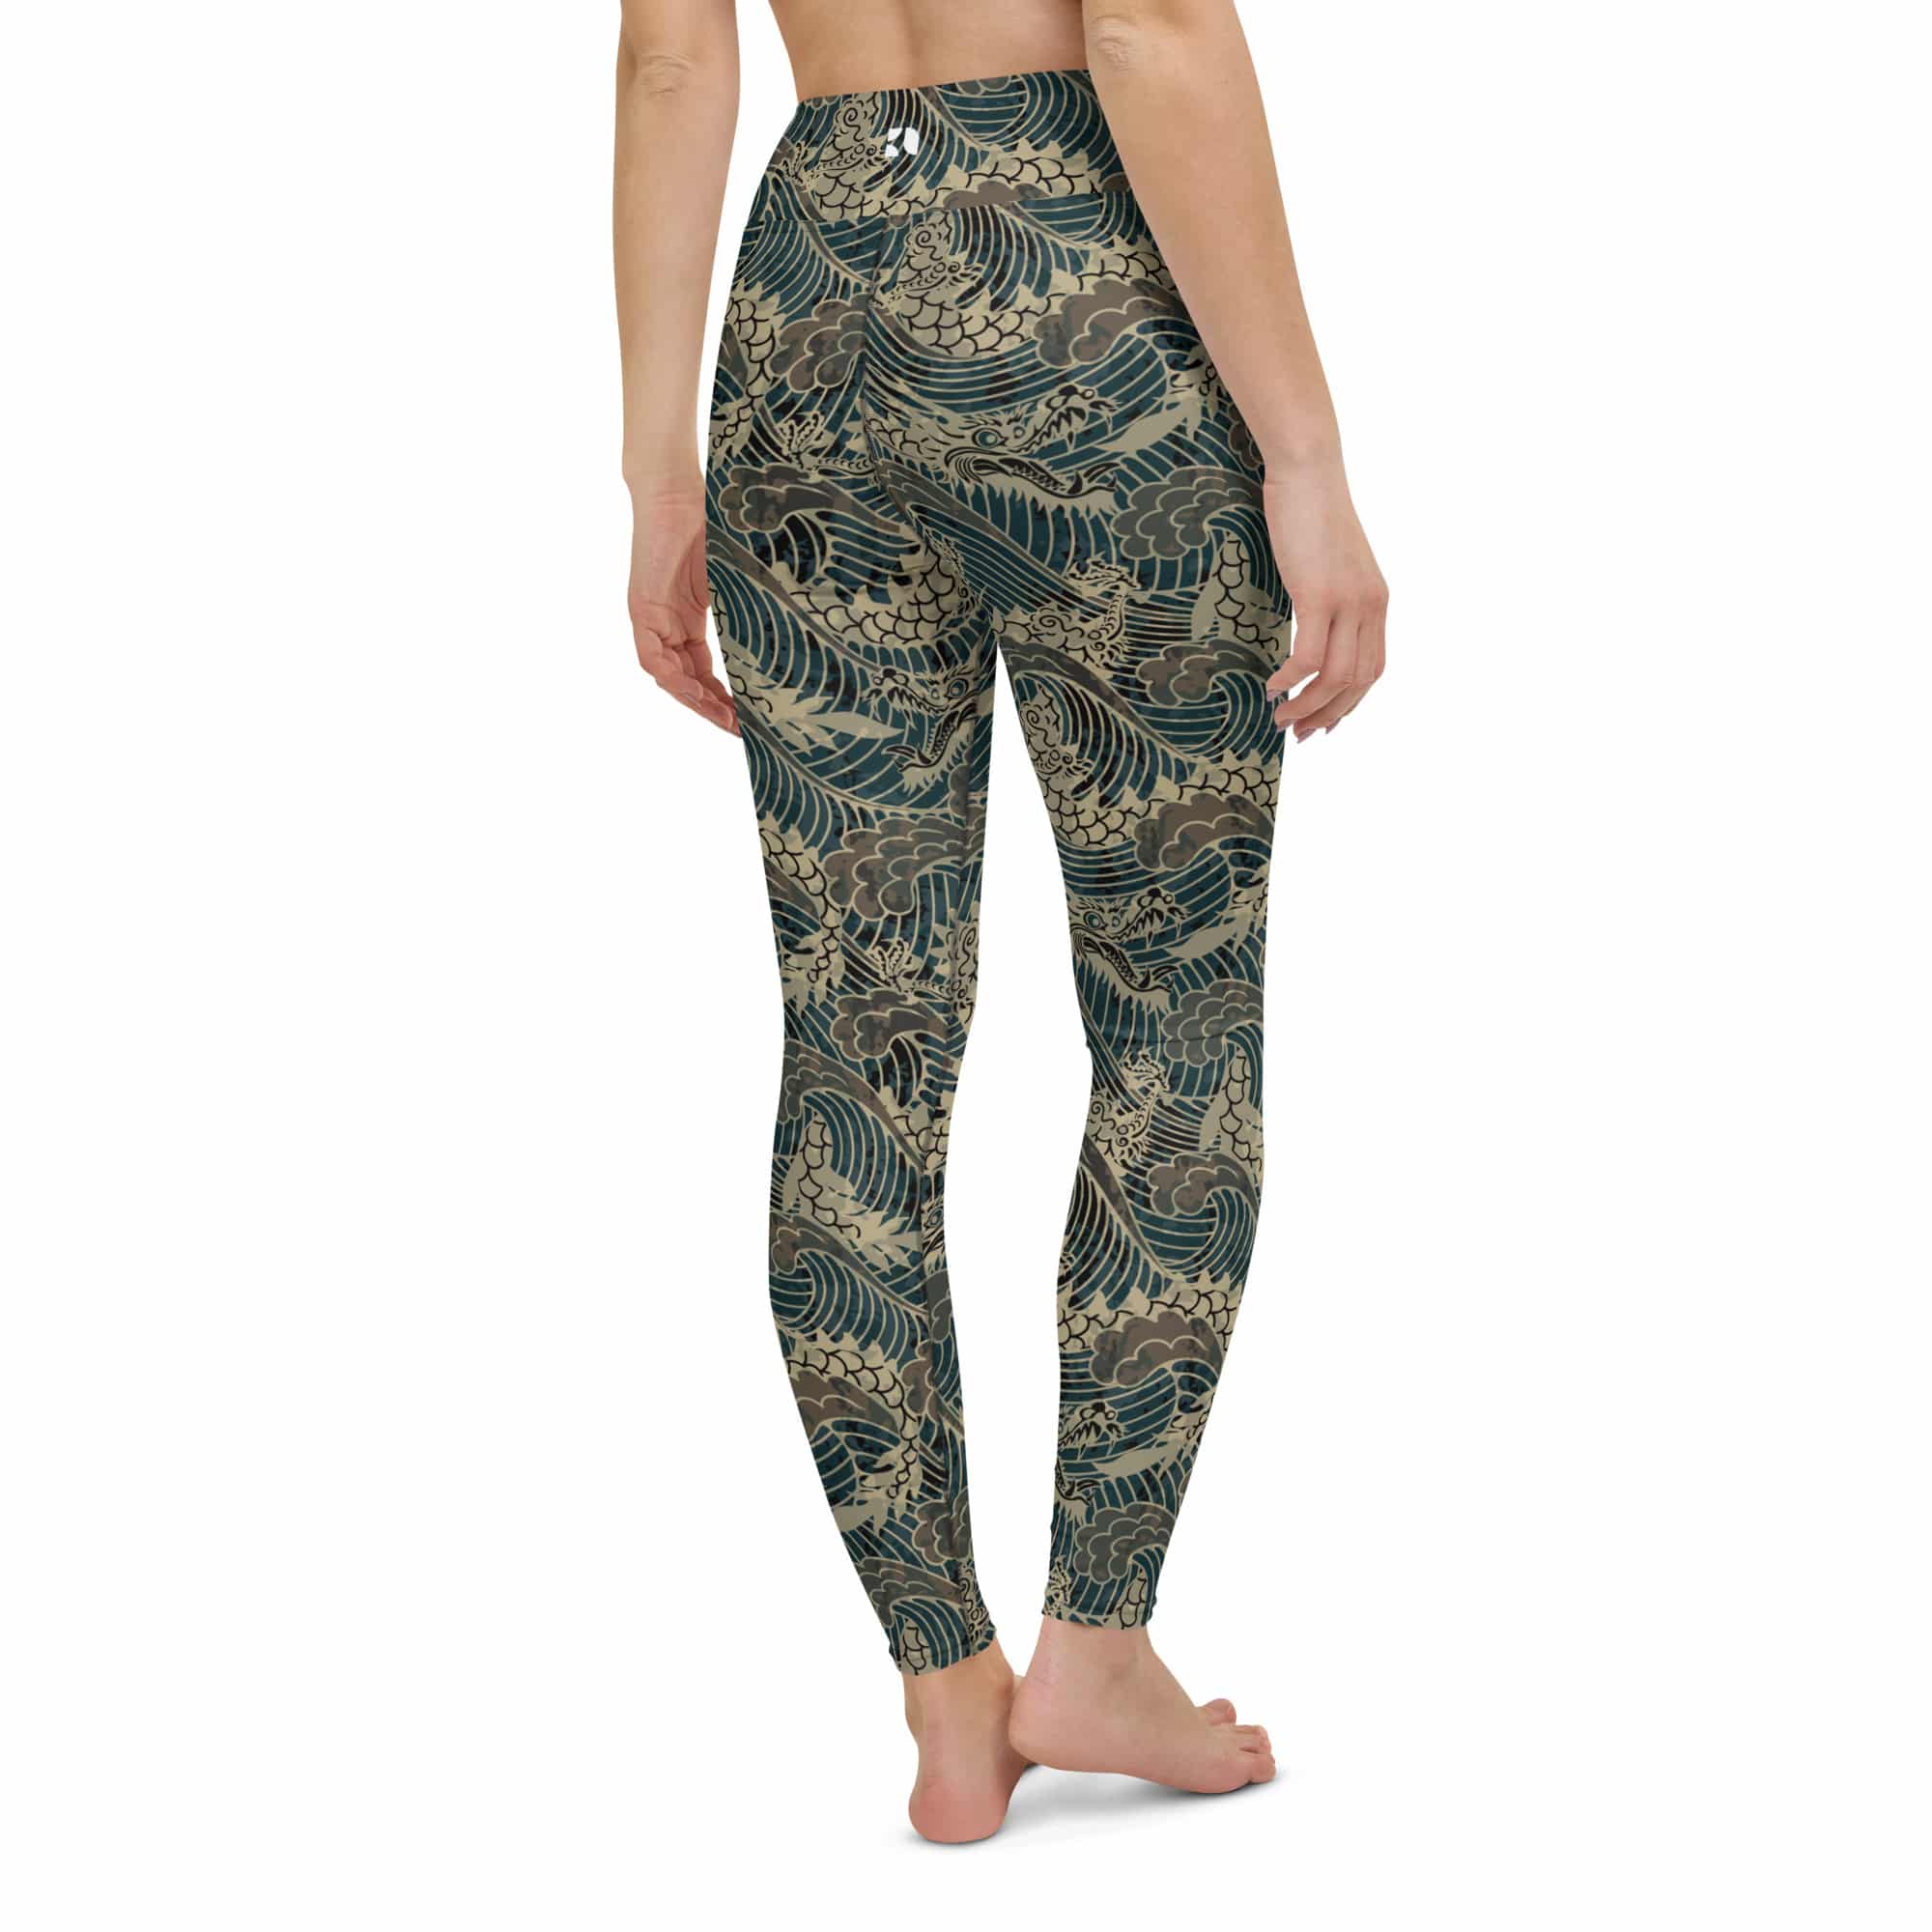 NIKE Tropical Print Floral Leggings XXL  Floral leggings, Tropical print,  Clothes design